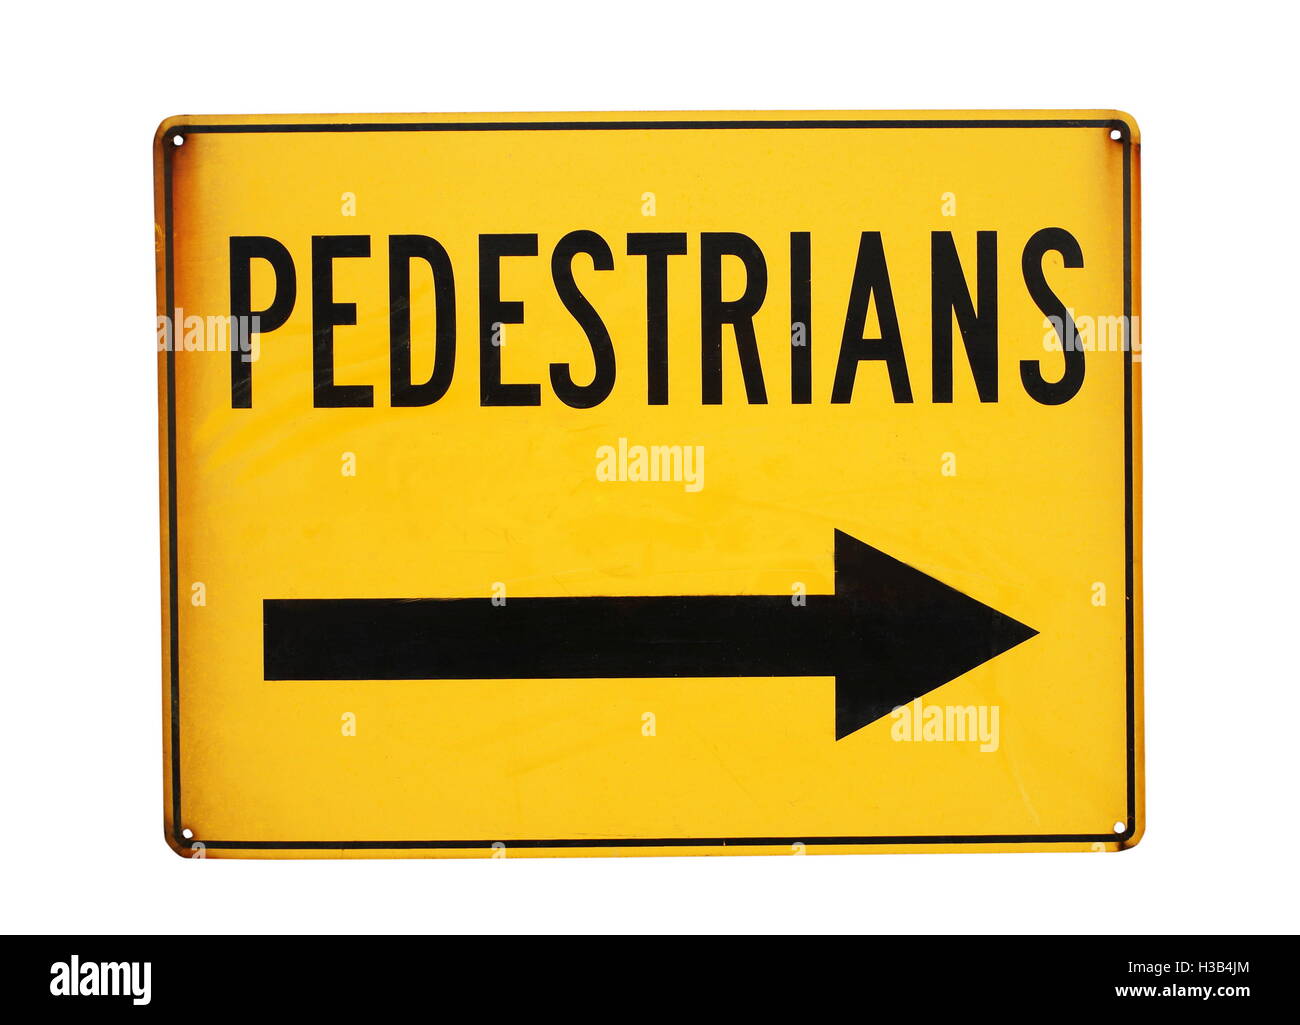 pedestrians road sign closeup on white Stock Photo